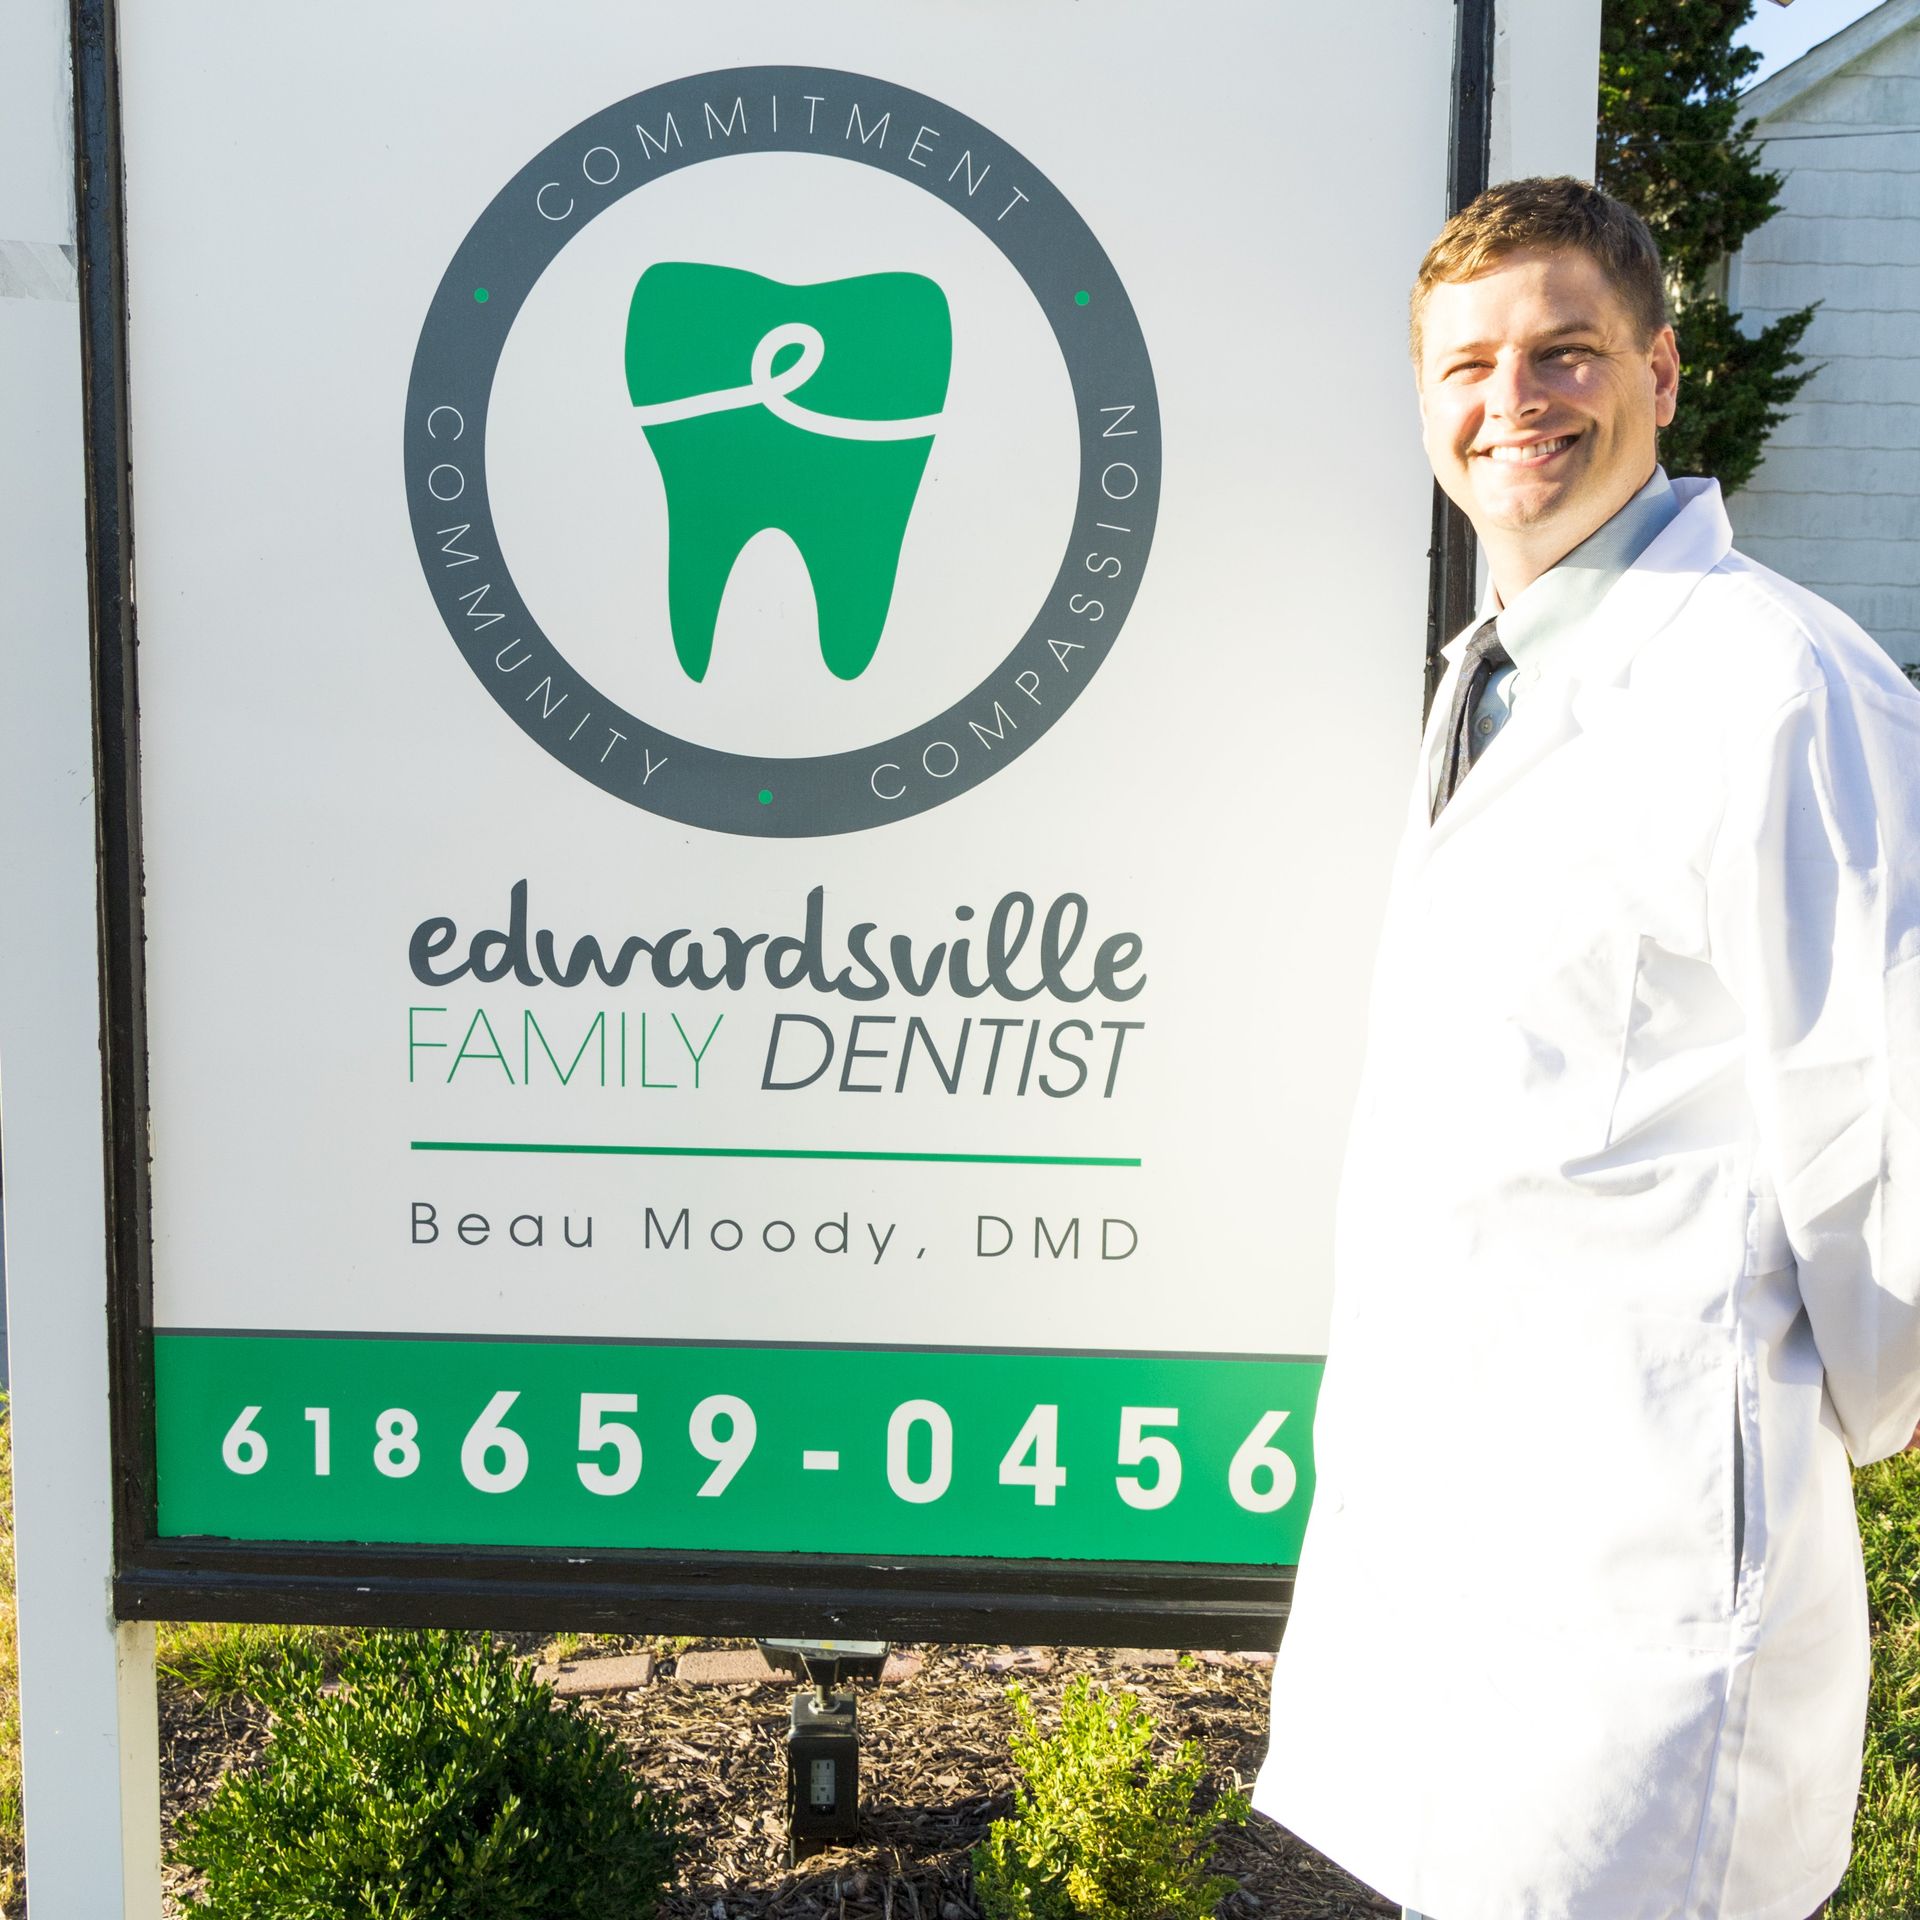 Edwardsville Family Dentist located near Edwardsville, IL post office